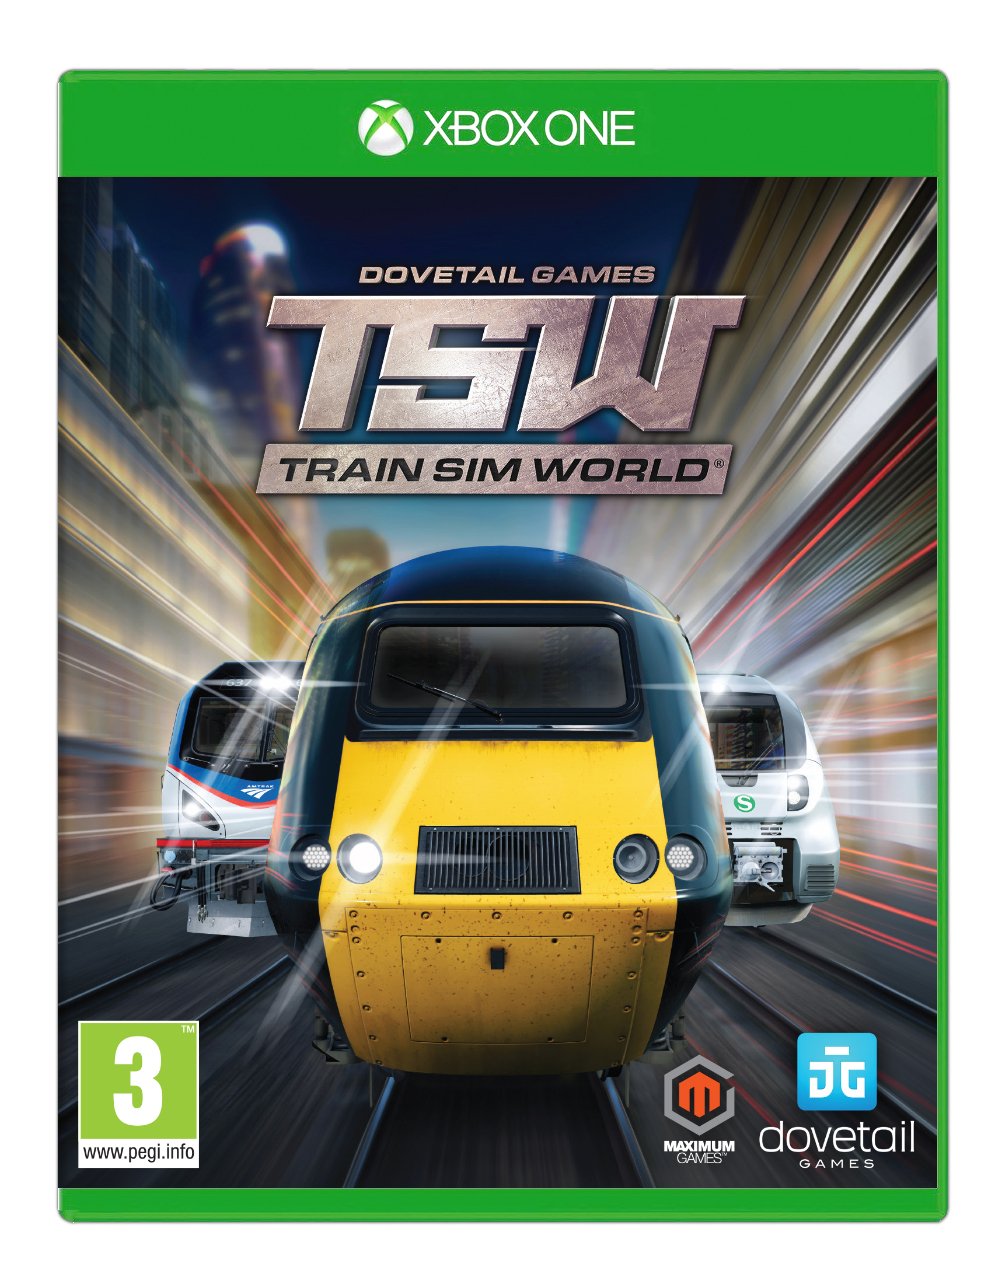 Nyc train simulator games download full version